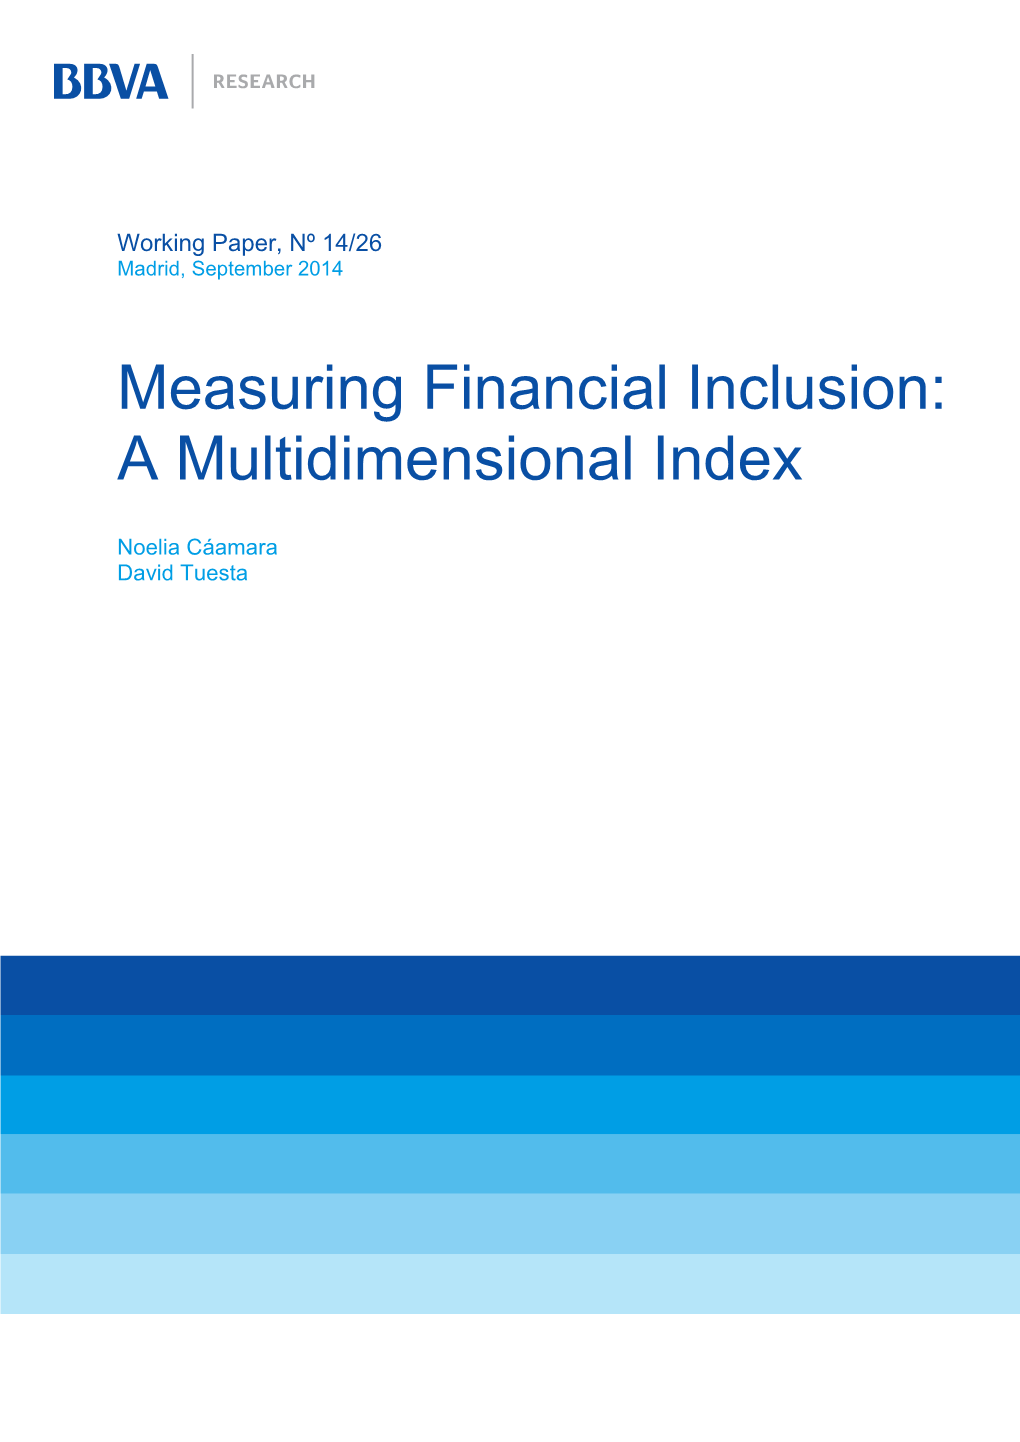 Measuring Financial Inclusion: a Multidimensional Index